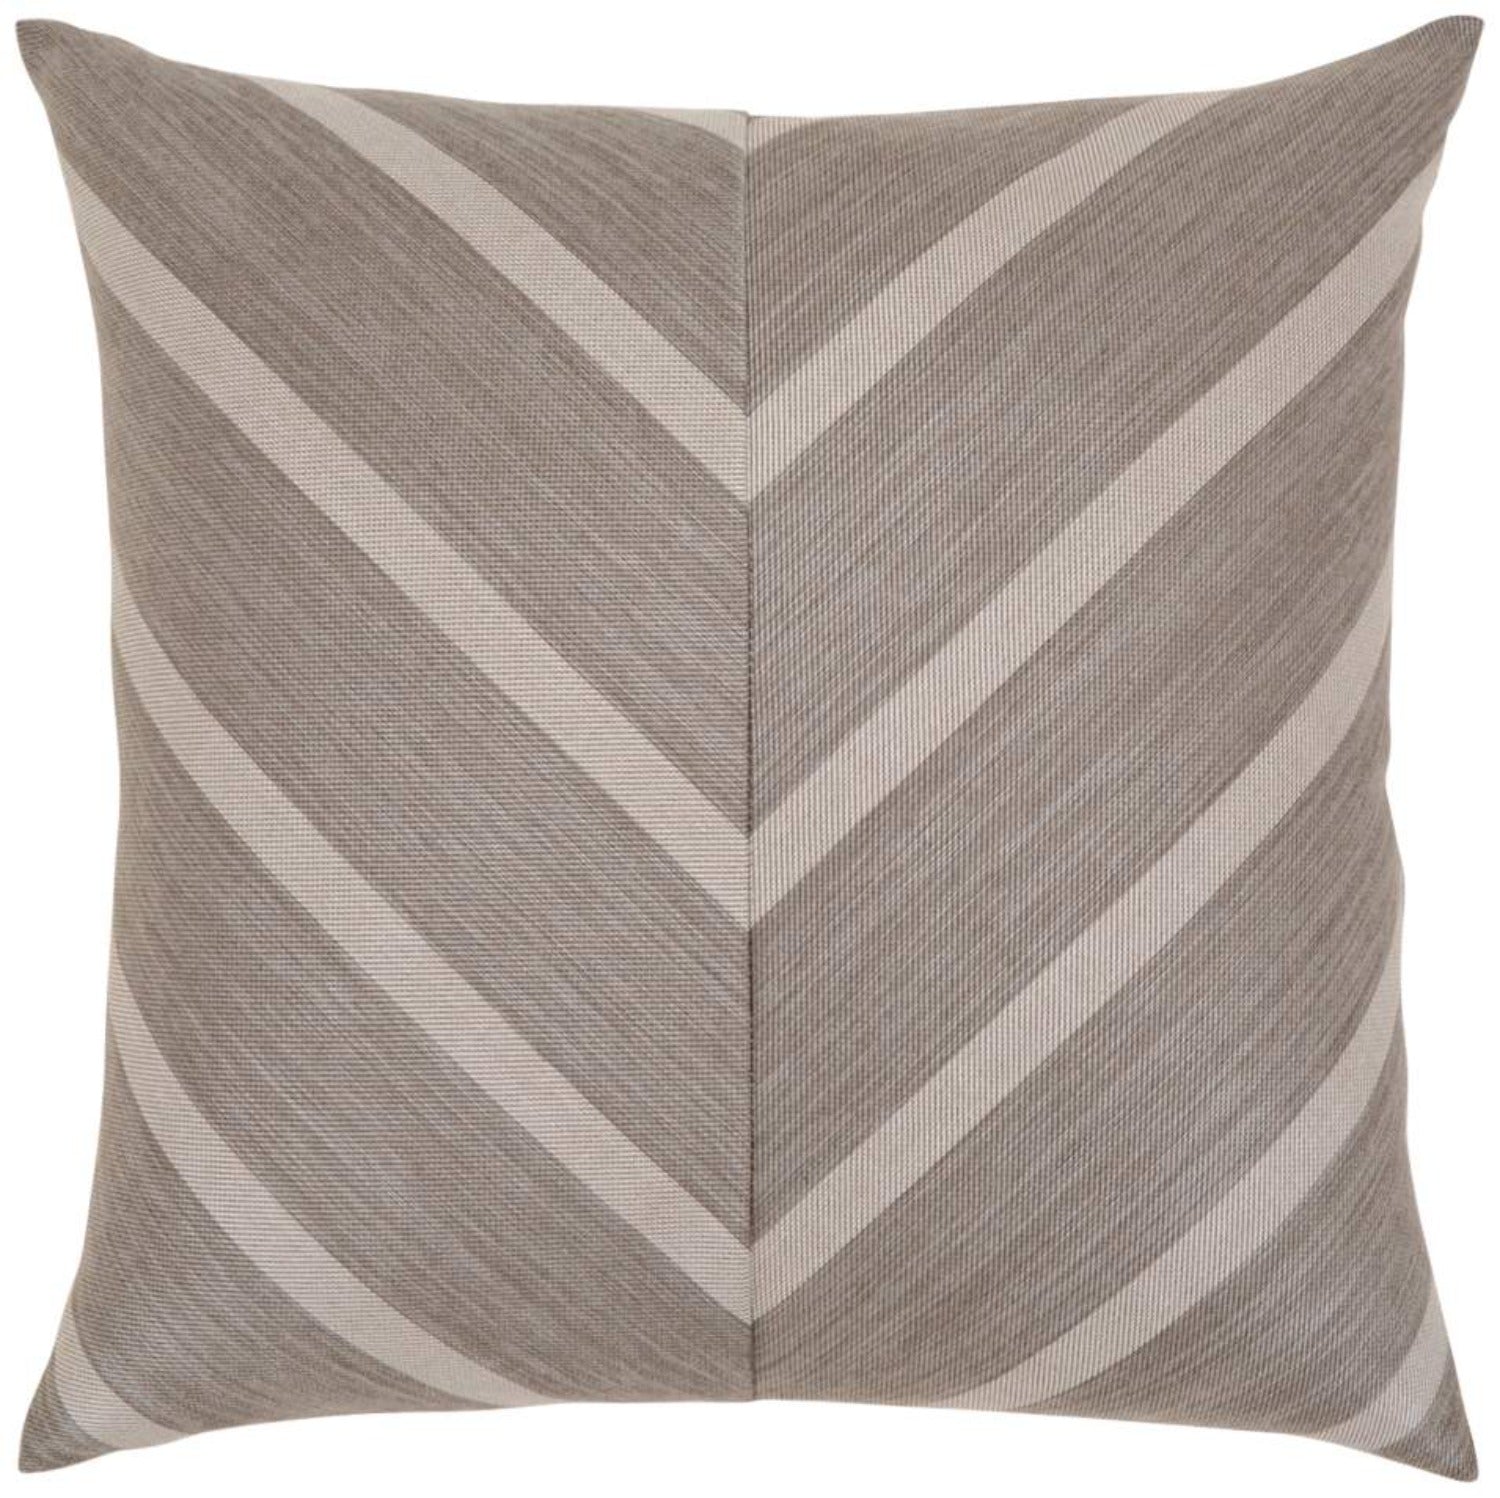 Elaine Smith 20 inch Square Outdoor Pillow - Sparkle Chevron - Polyester Fiber Fill Throw Pillows 12031016